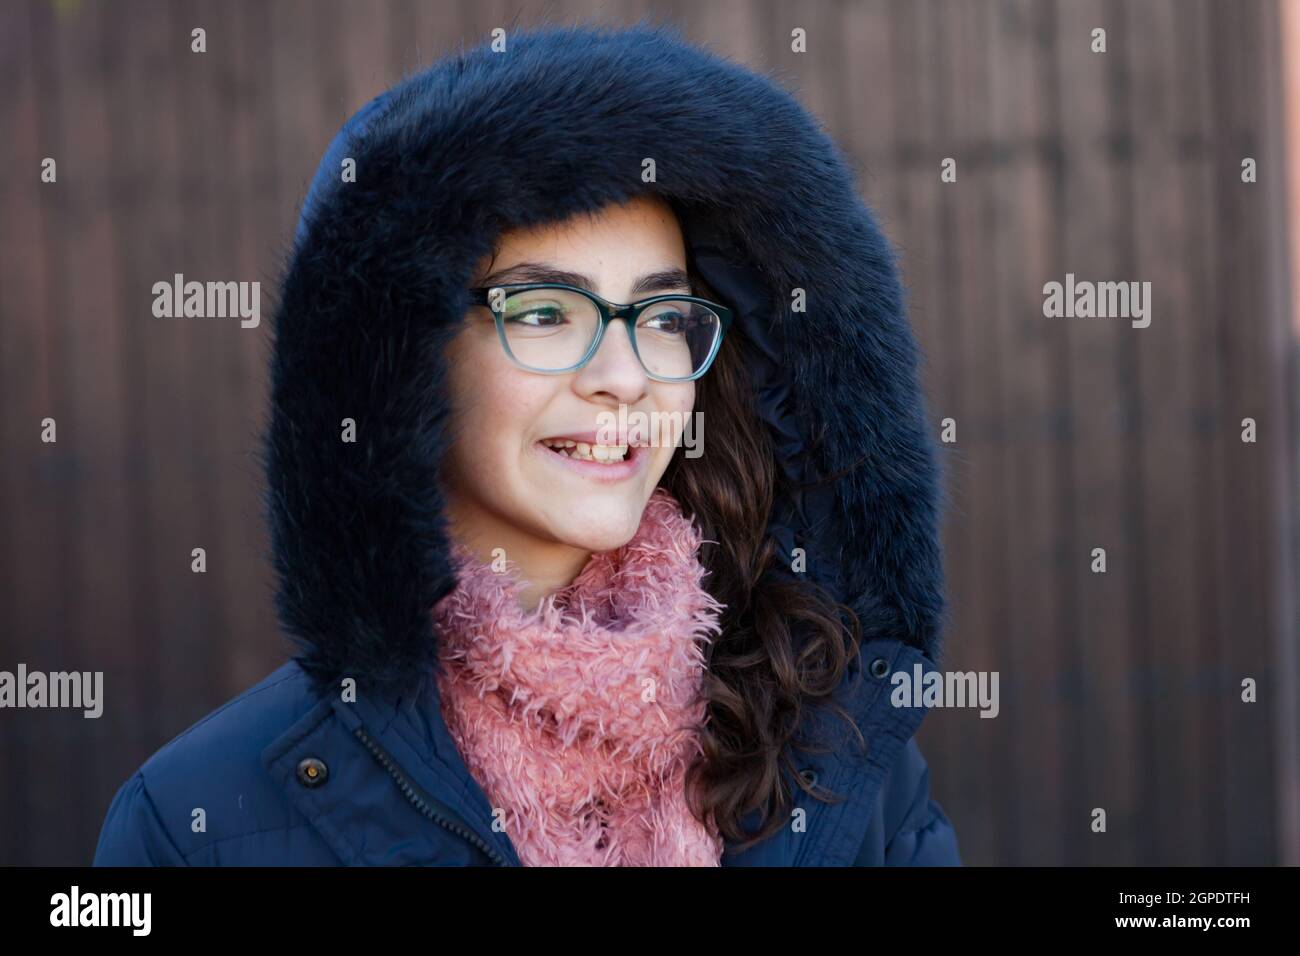 Smiling preteen girl wearing fur hood at winter Stock Photo